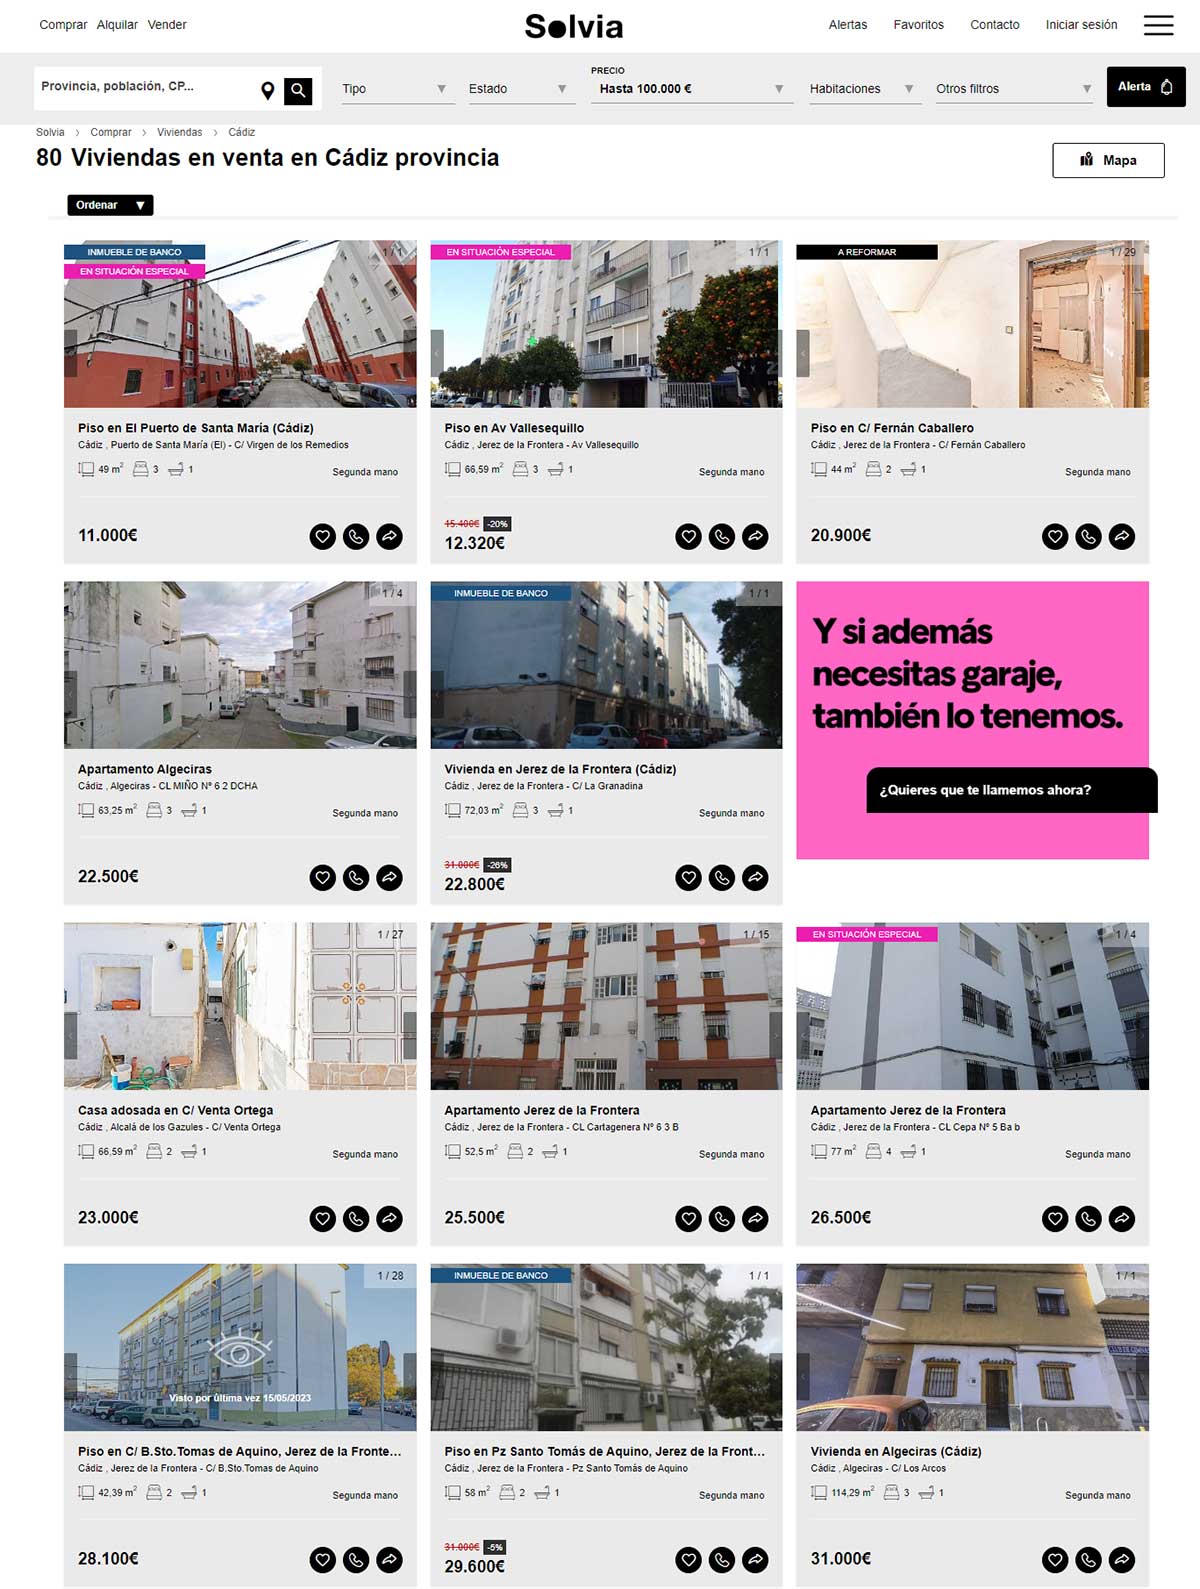 Catálogo de viviendas en Solvia